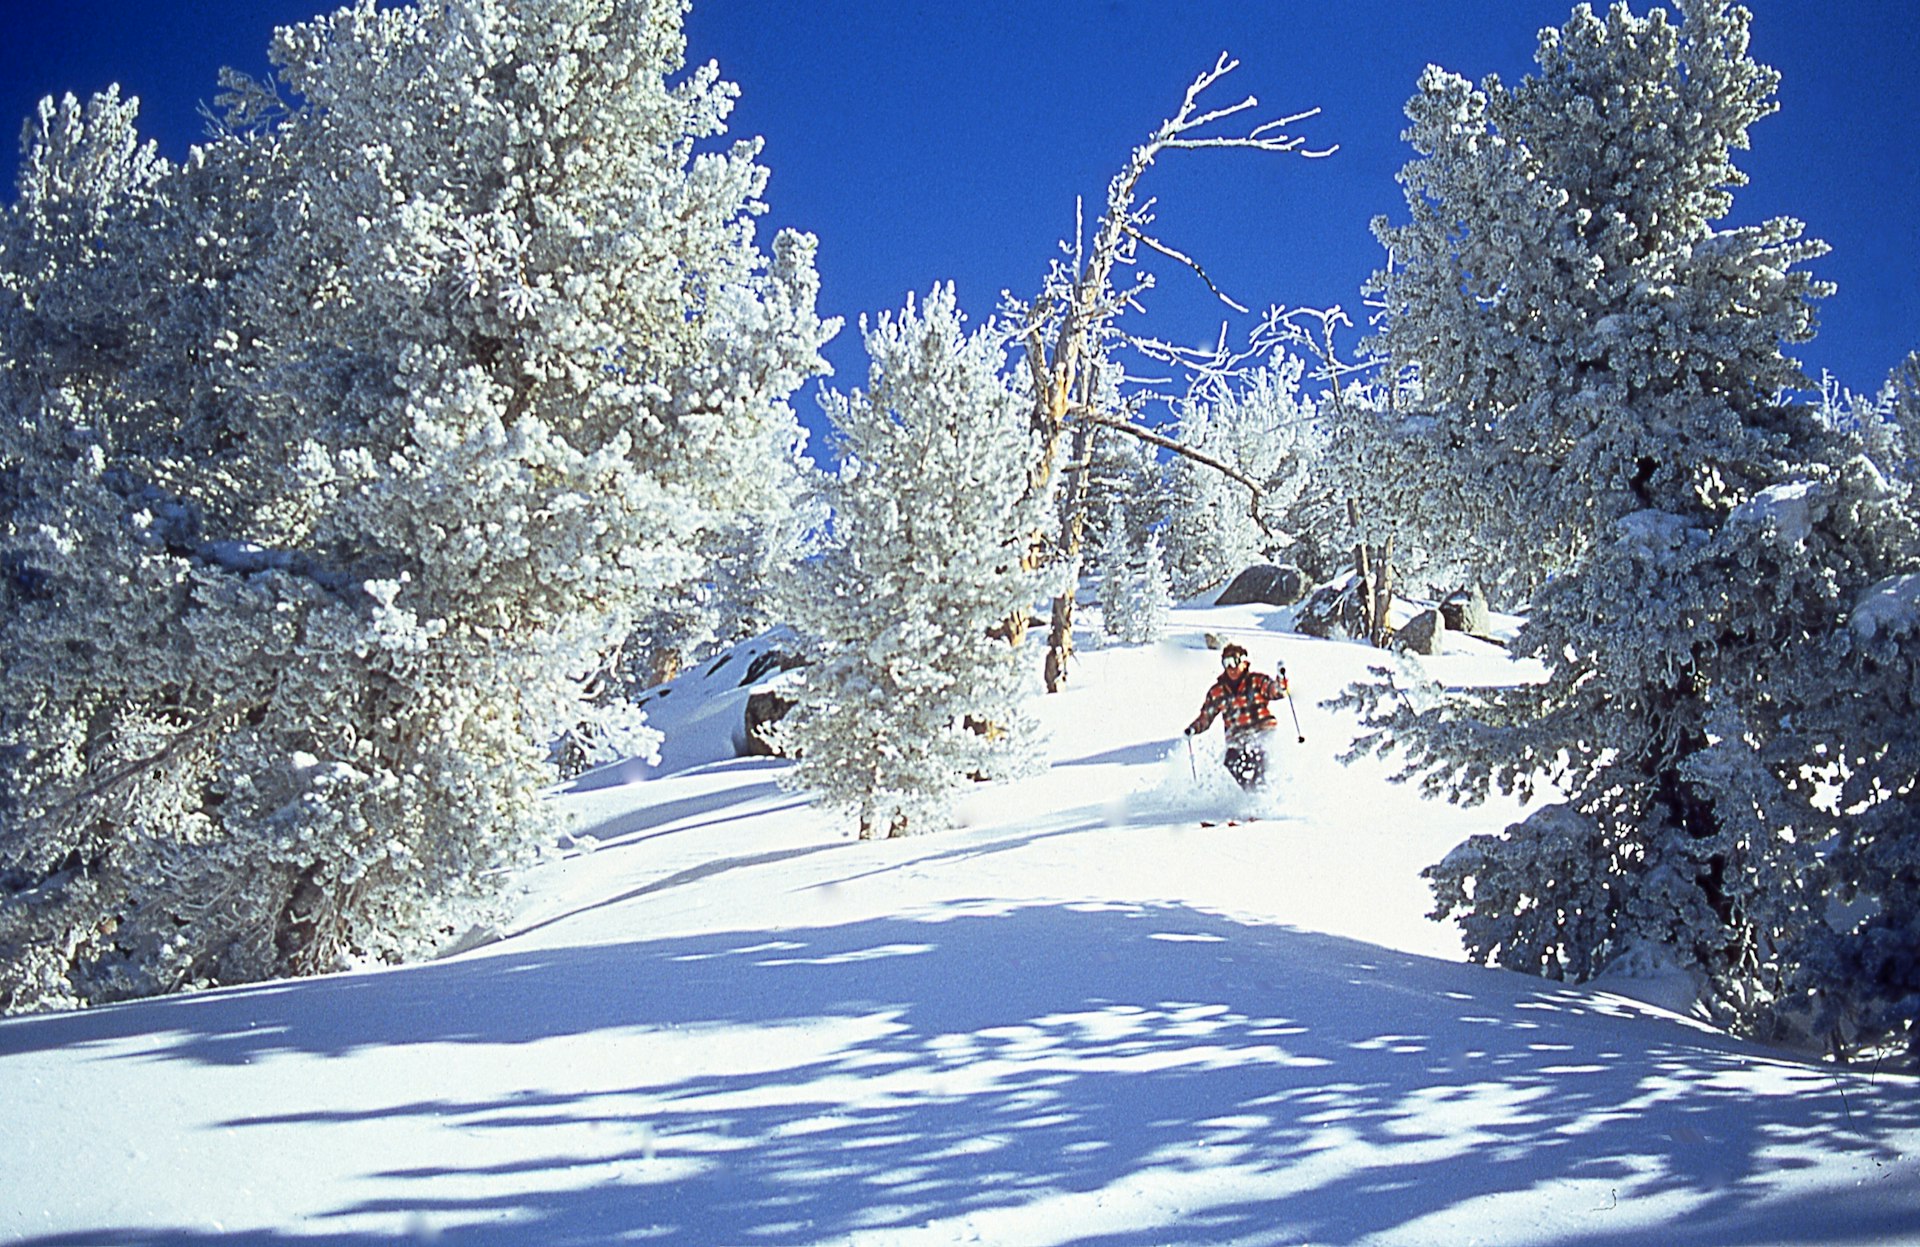 A male skier skiing downhill on powder snow, Lake Tahoe, California, USA